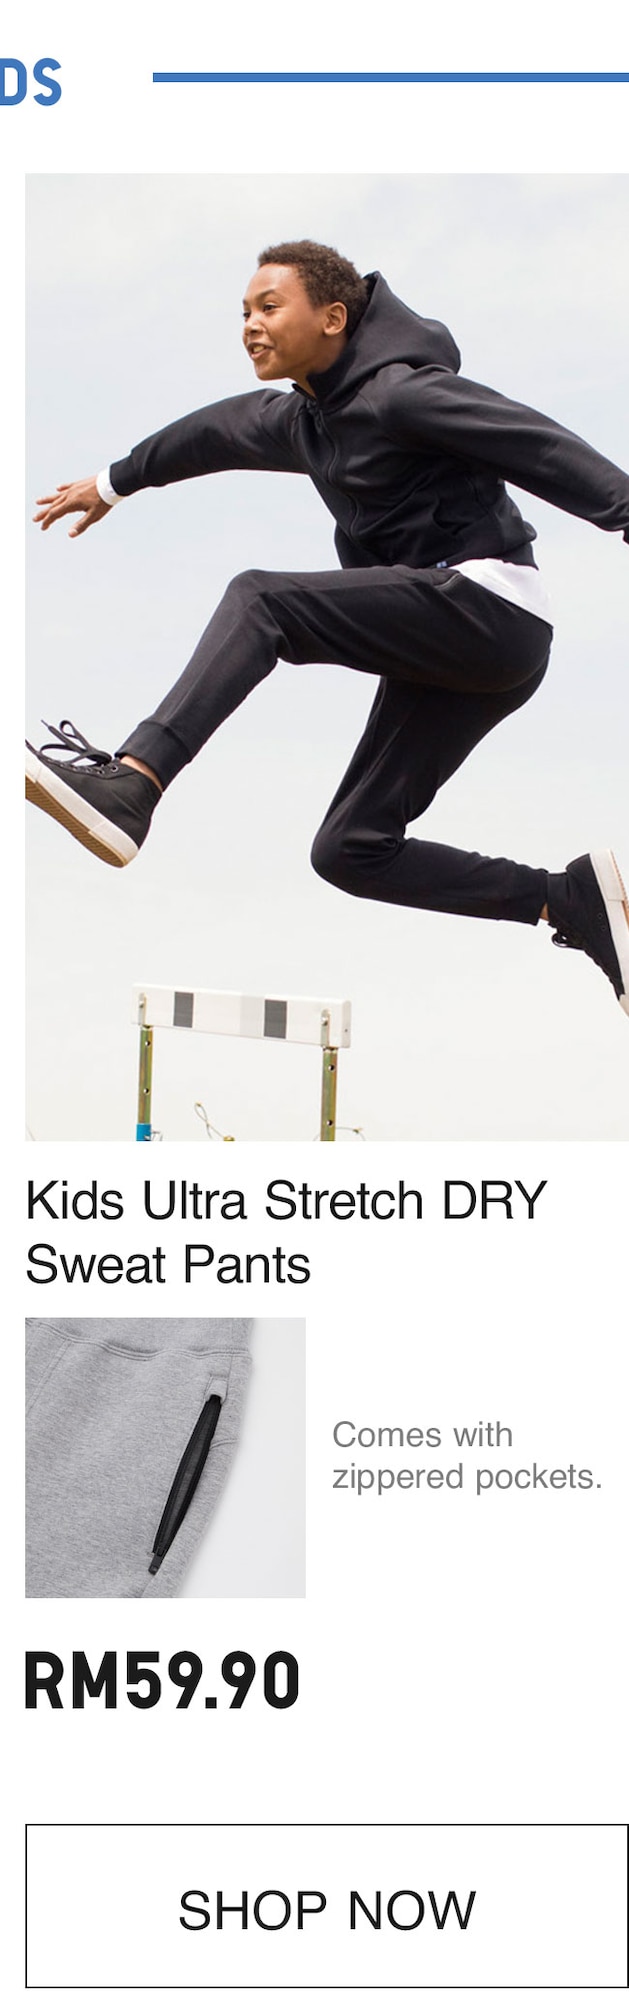 KIDS ULTRA STRETCH DRY SWEAT PANTS